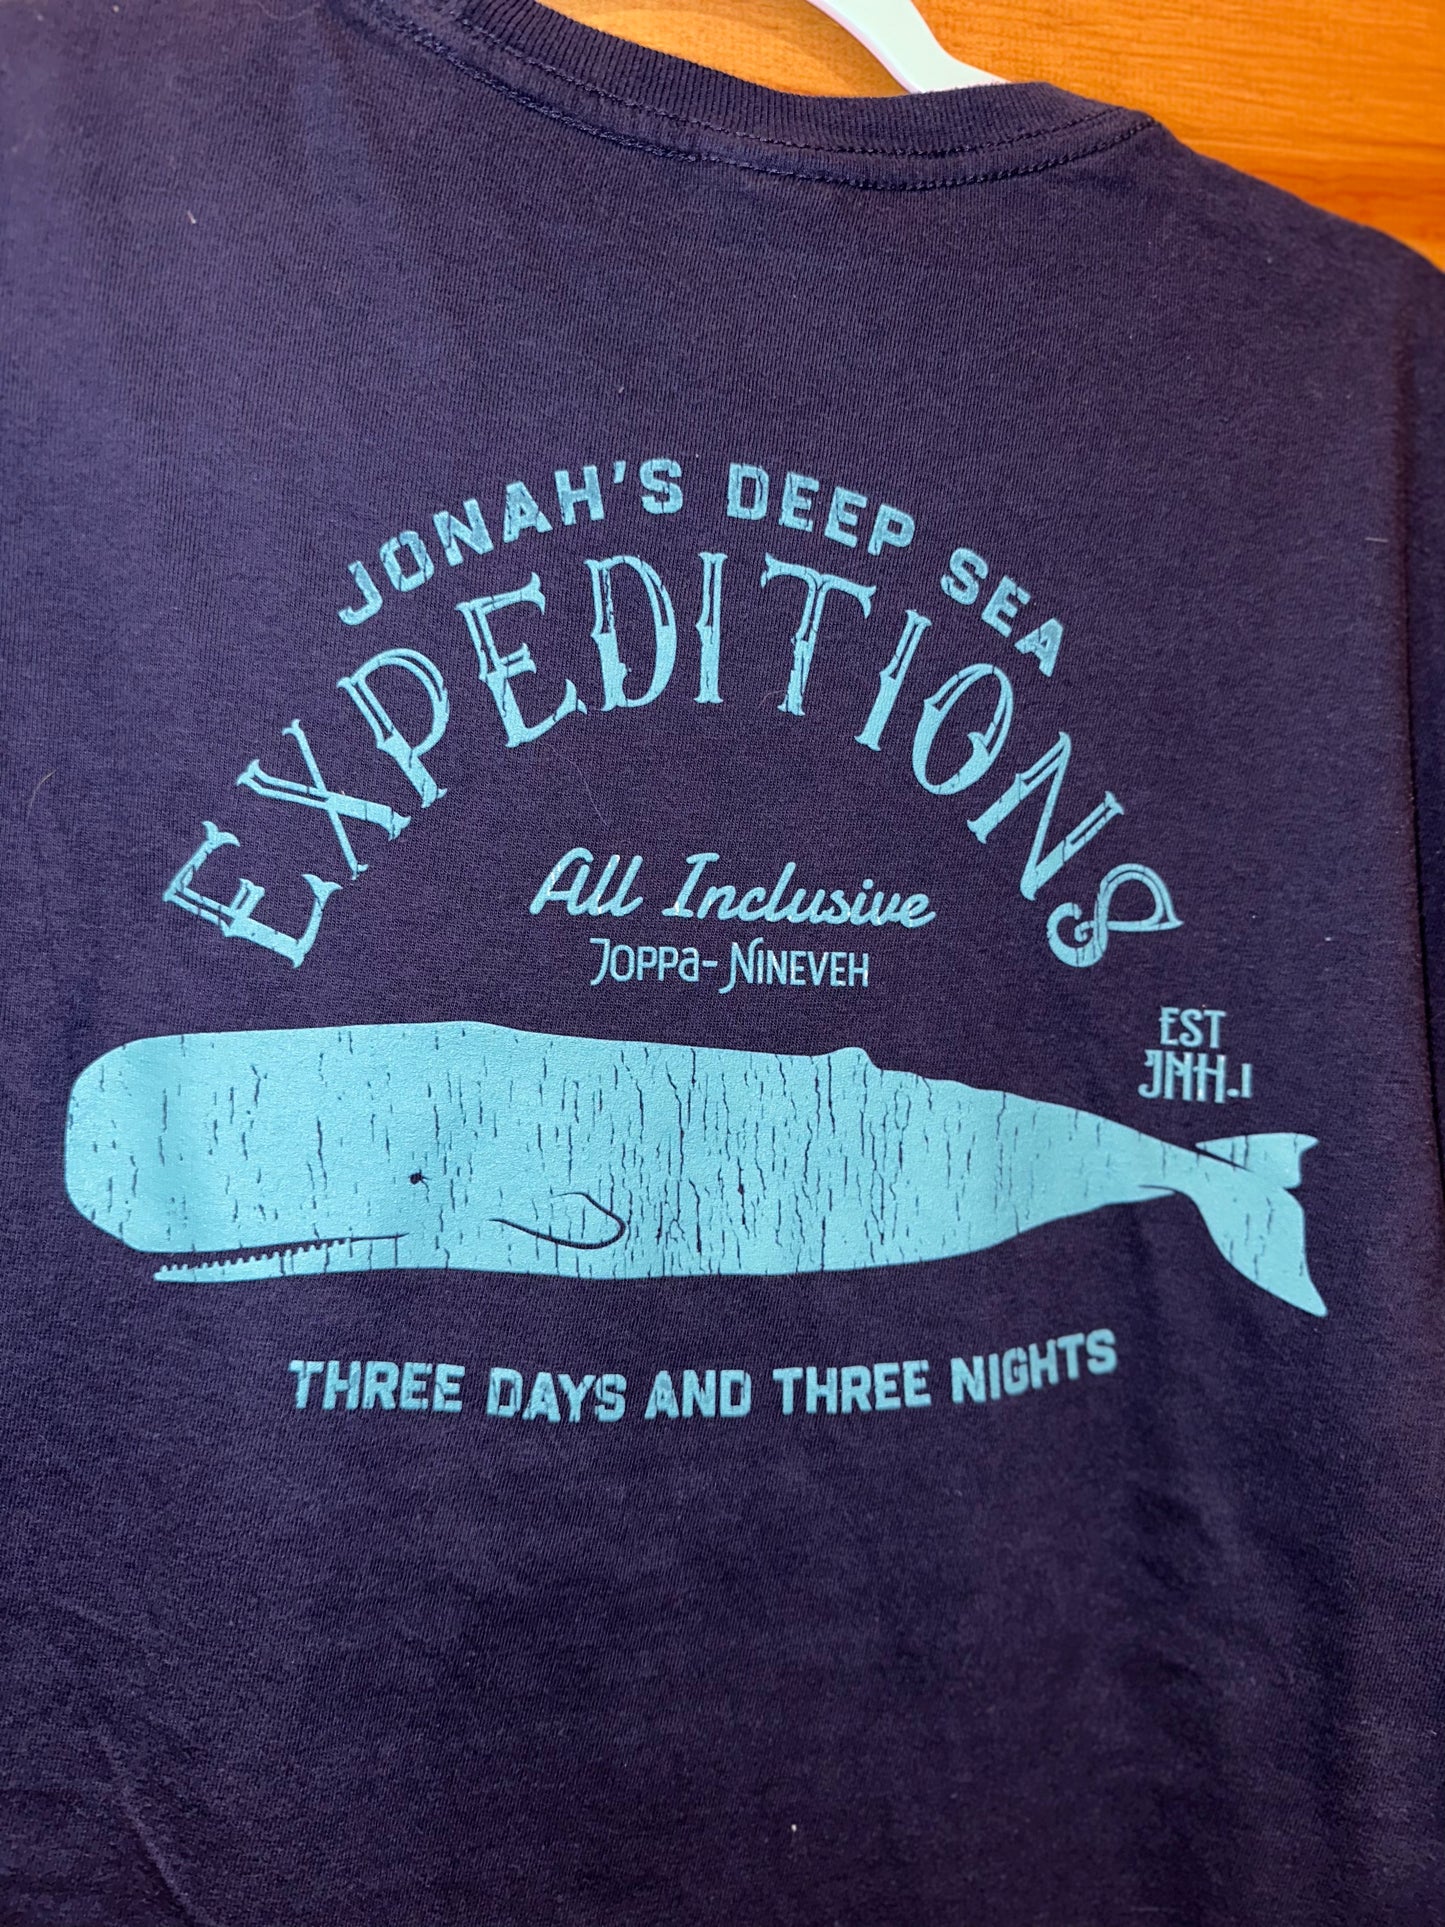 Godspeed Textiles Jonah’s Deep Sea Expeditions